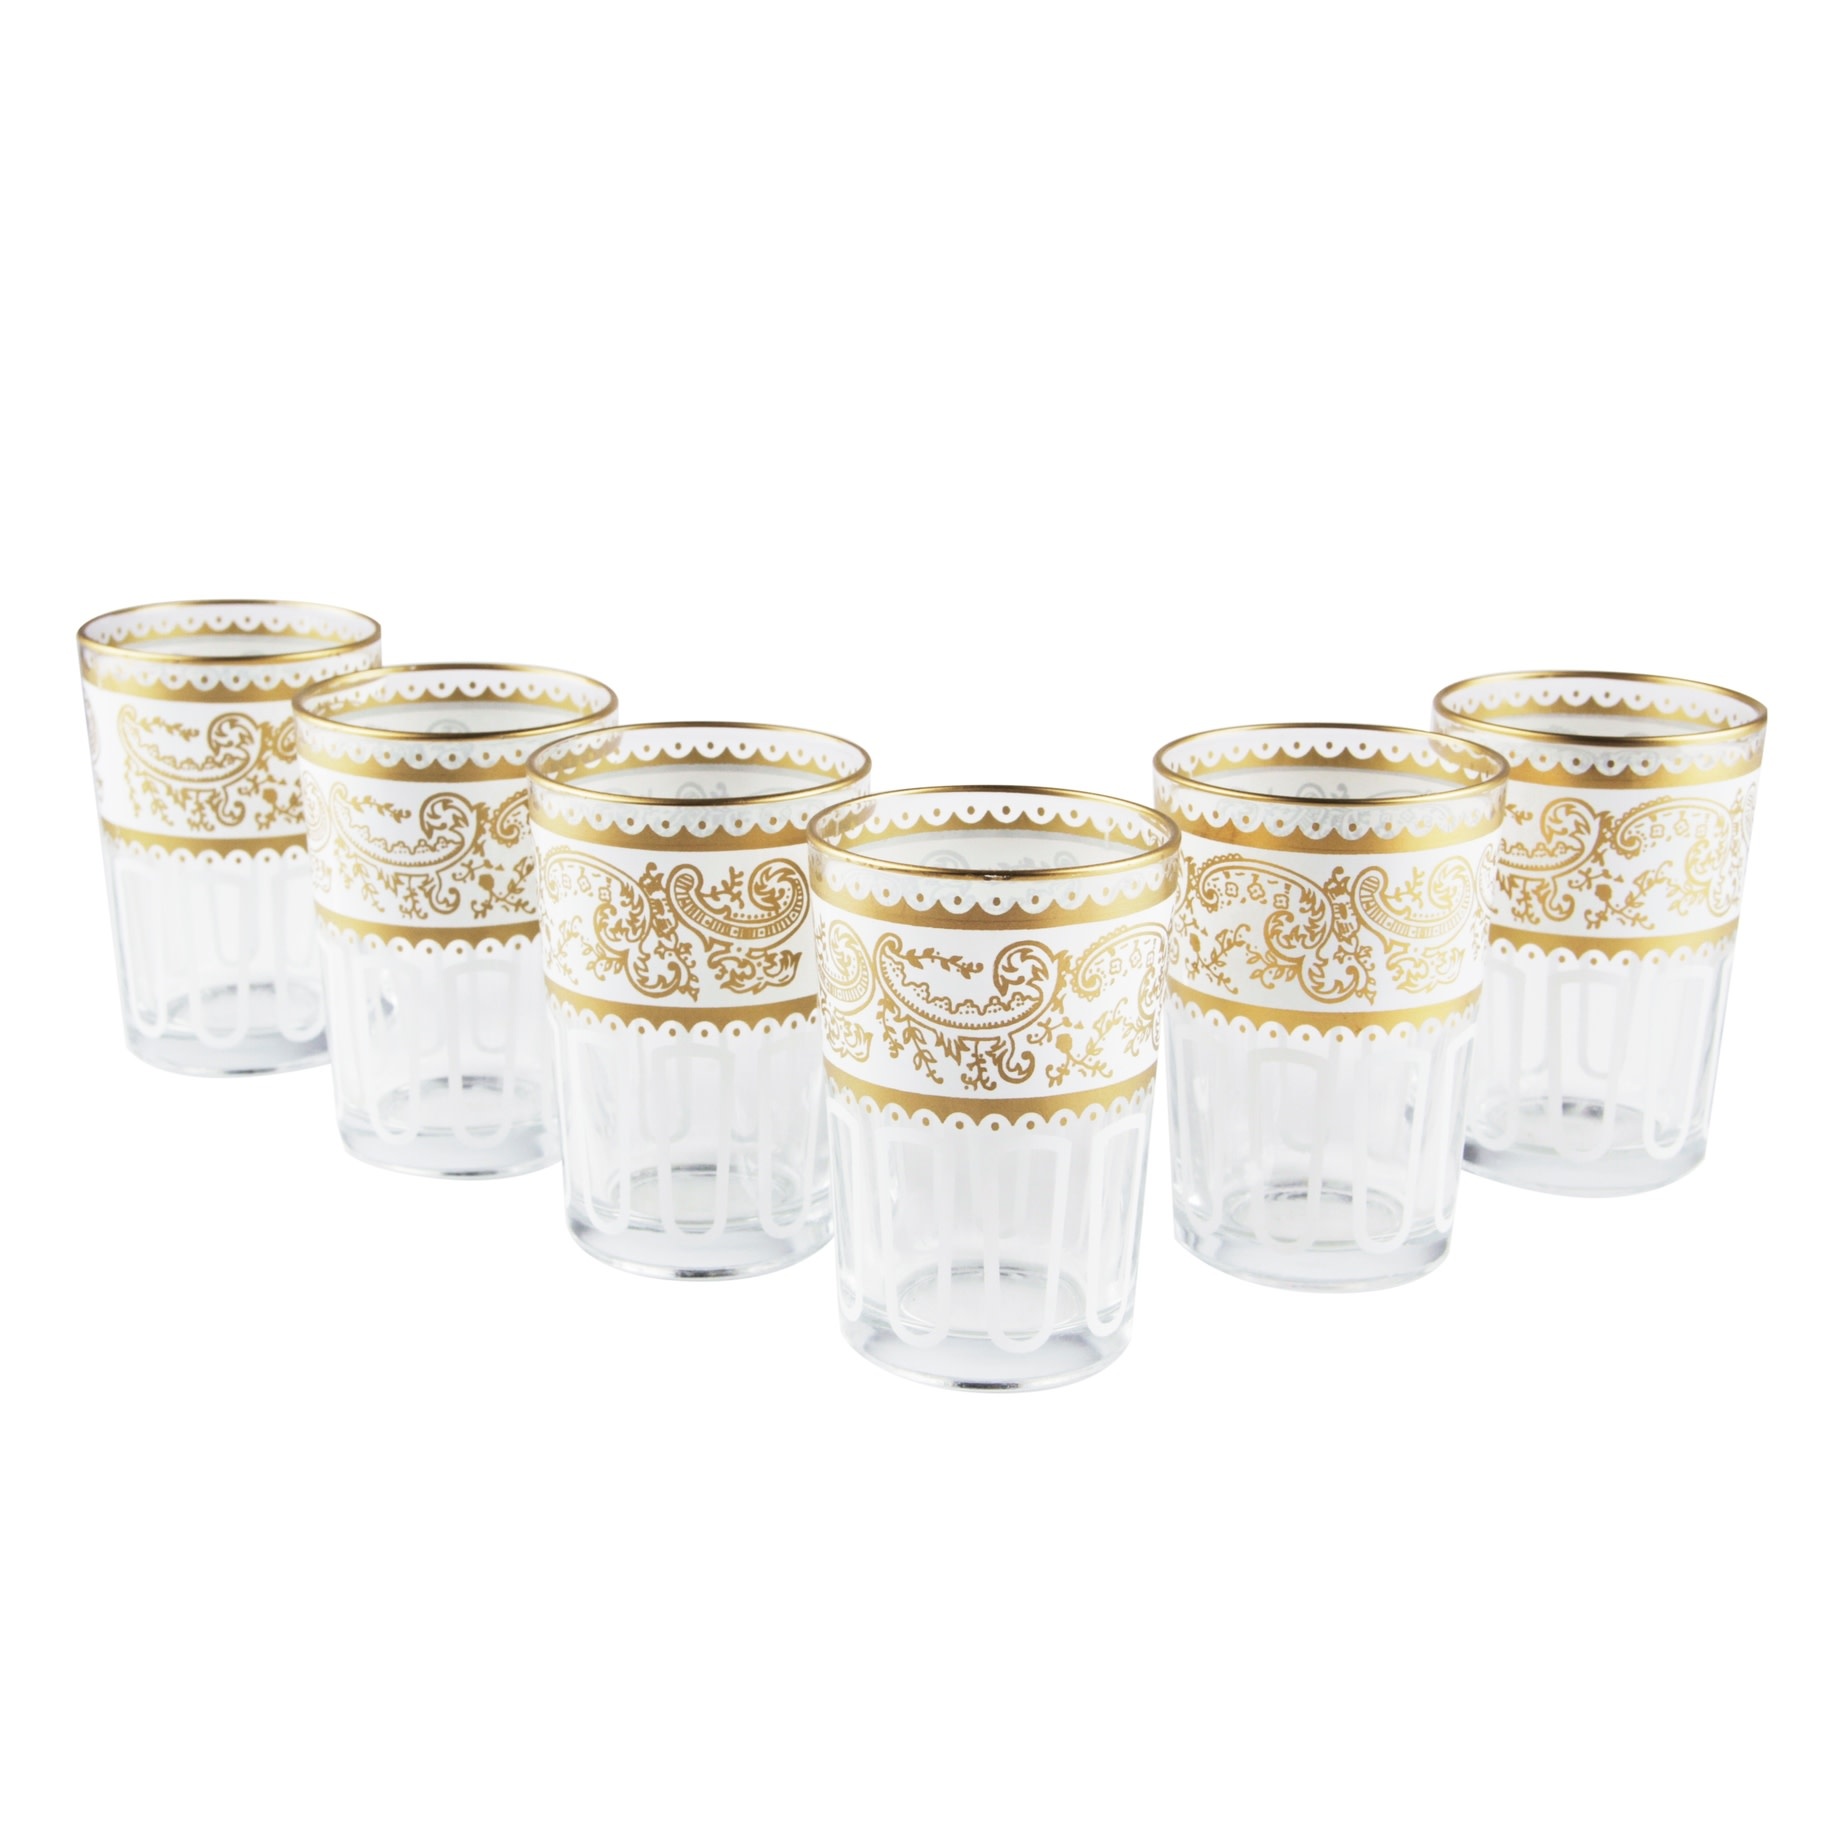 Tea Ware Essaouira Moroccan Water/Tea Glasses (White/Gold)